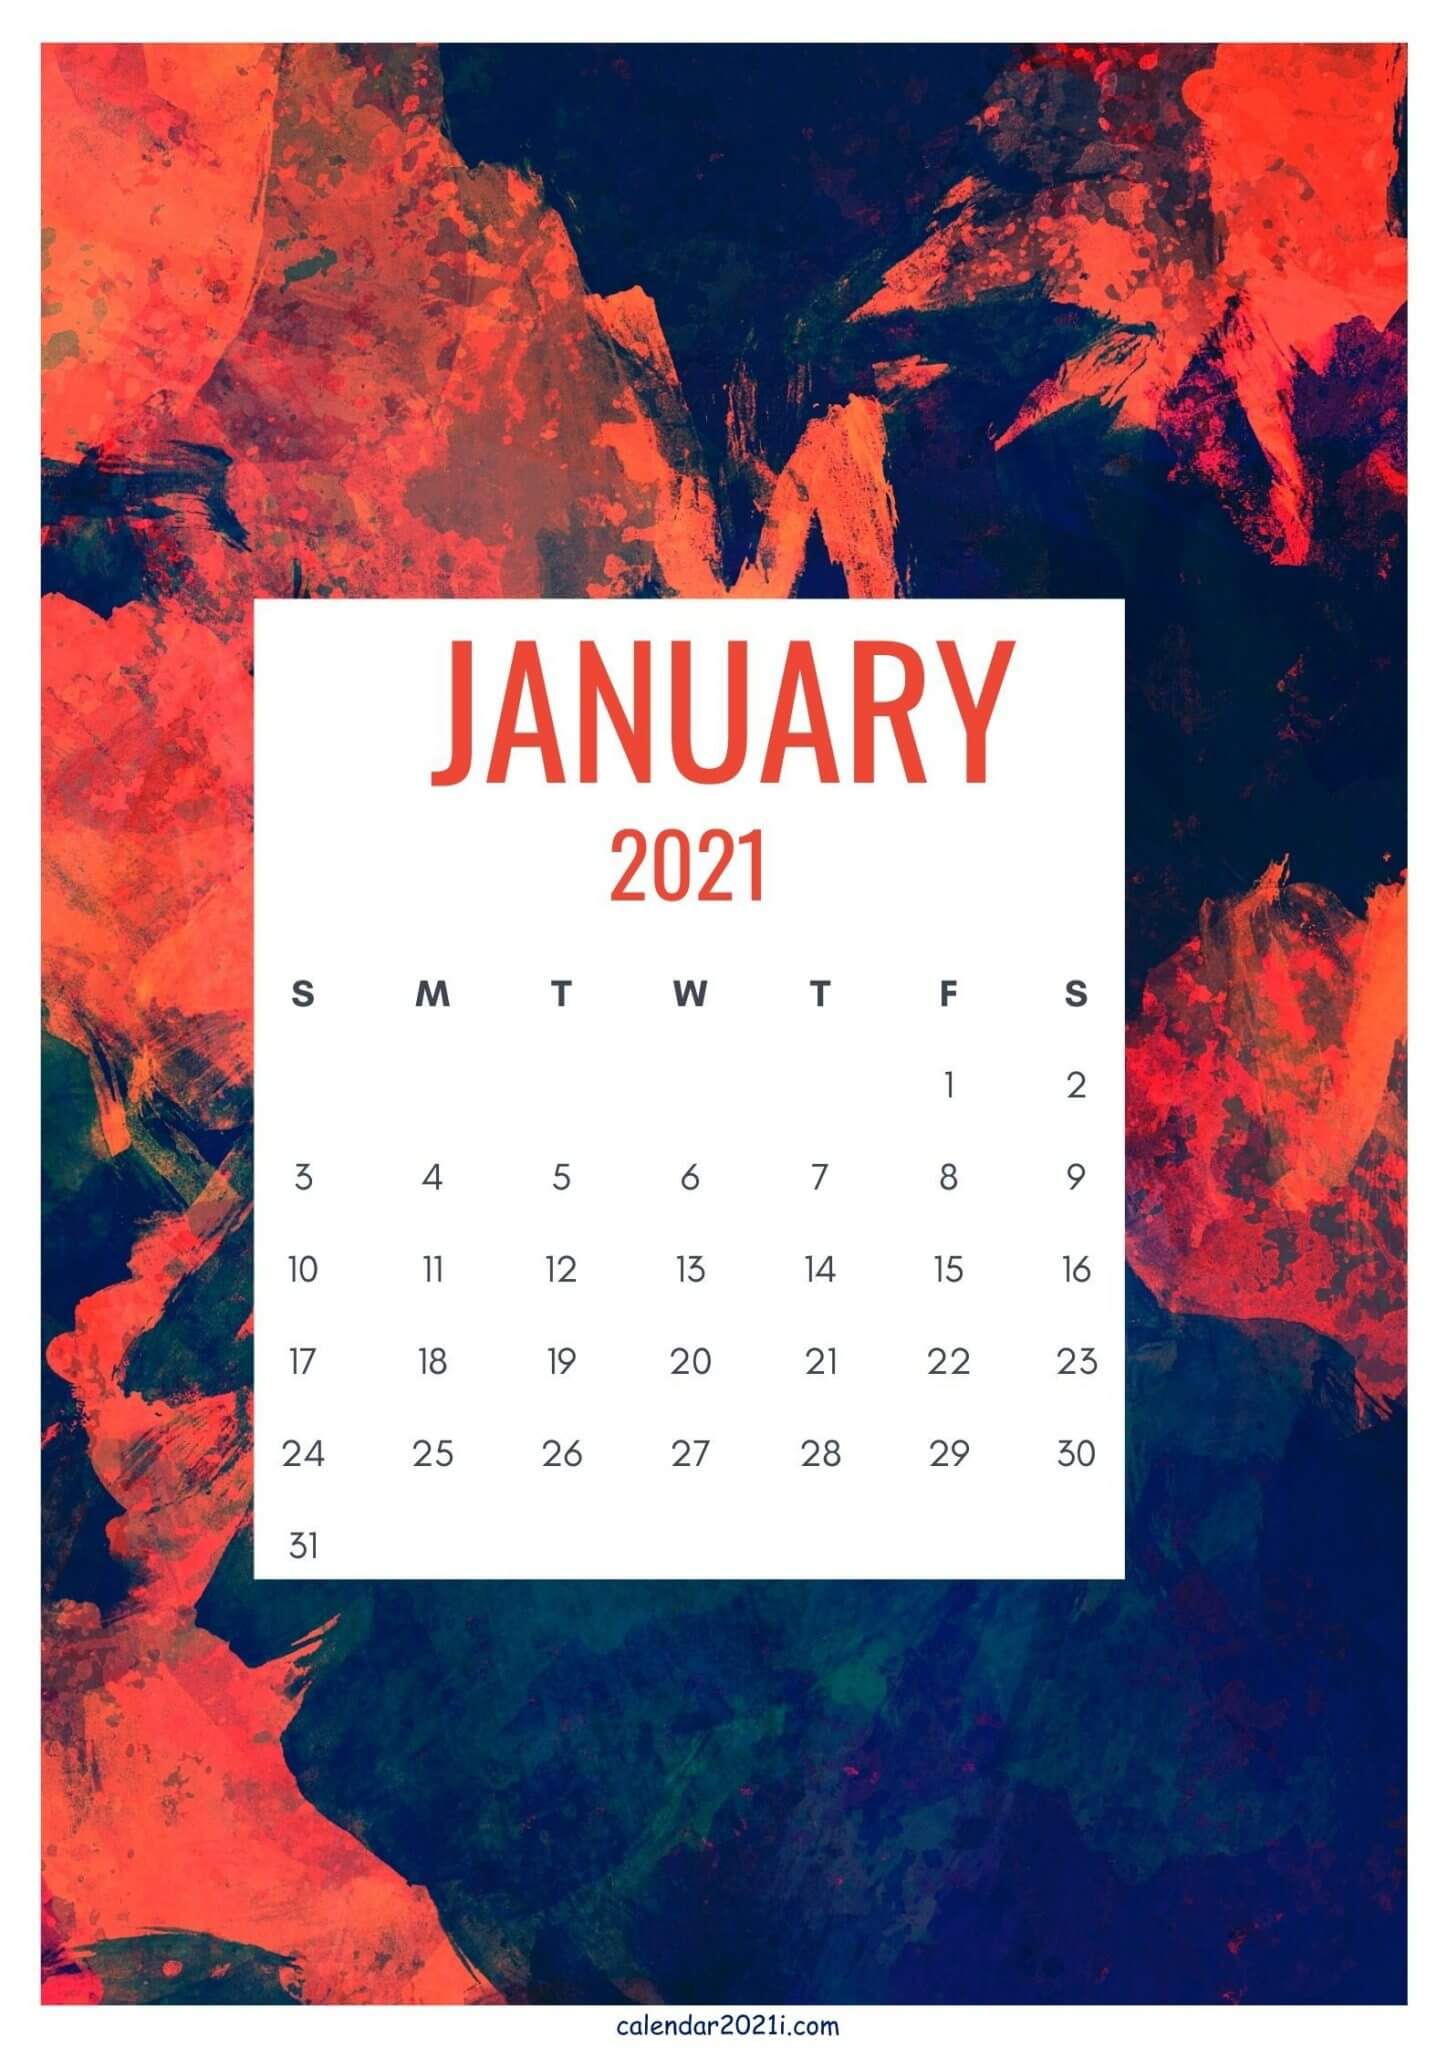 January 2021 Calendar Iphone Wallpaper Image ID 8